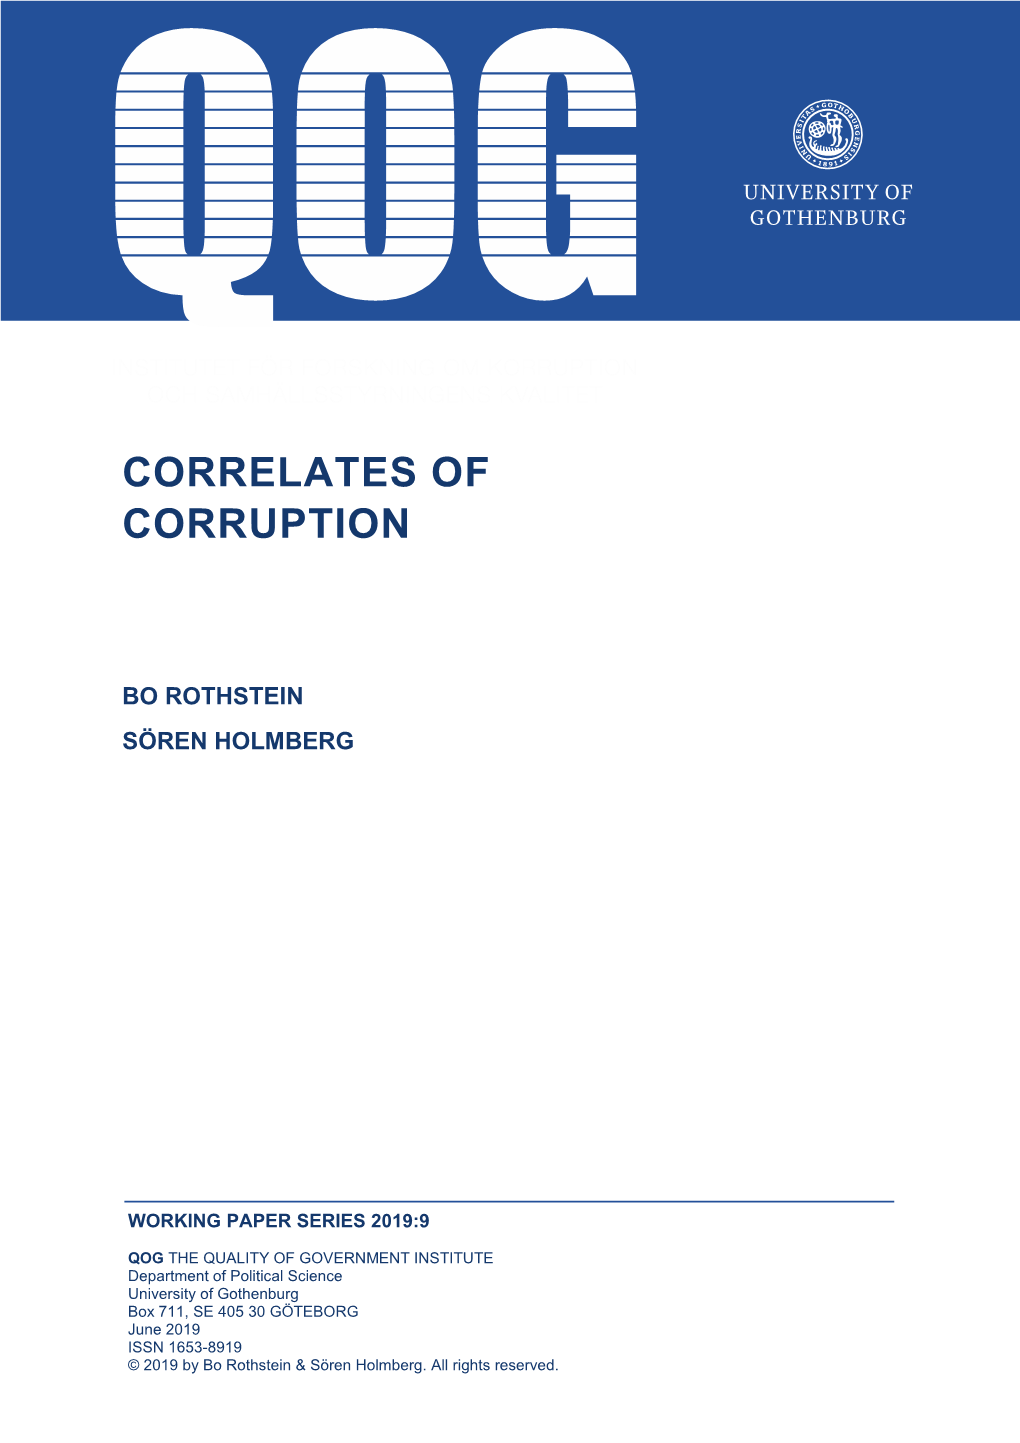 Bo Rothstein & Sören Holmberg: Correlates of Corruption